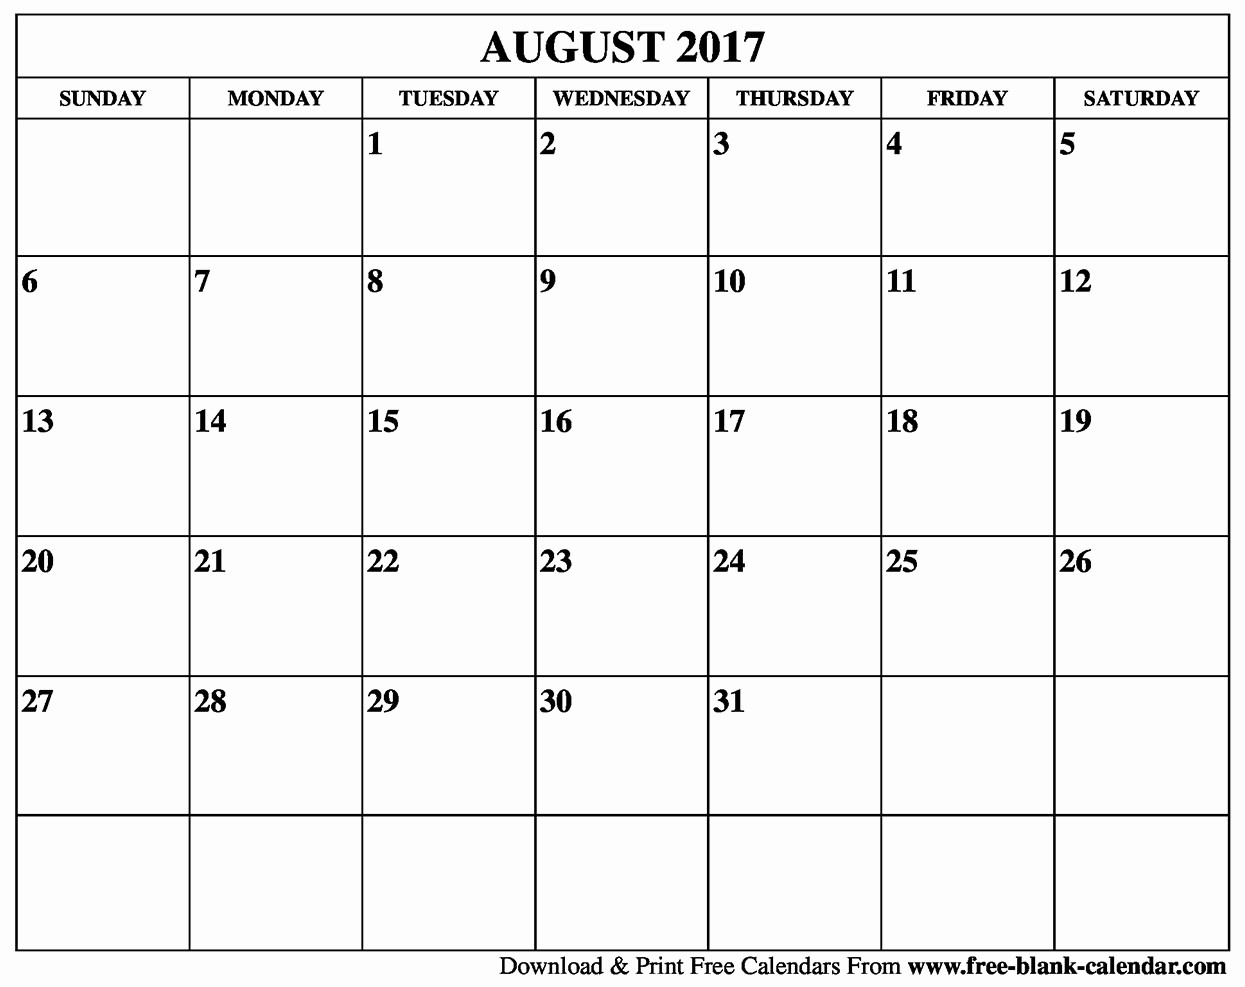 Blank Calendar Template August 2017 Inspirational Blank August 2017 Calendar Printable